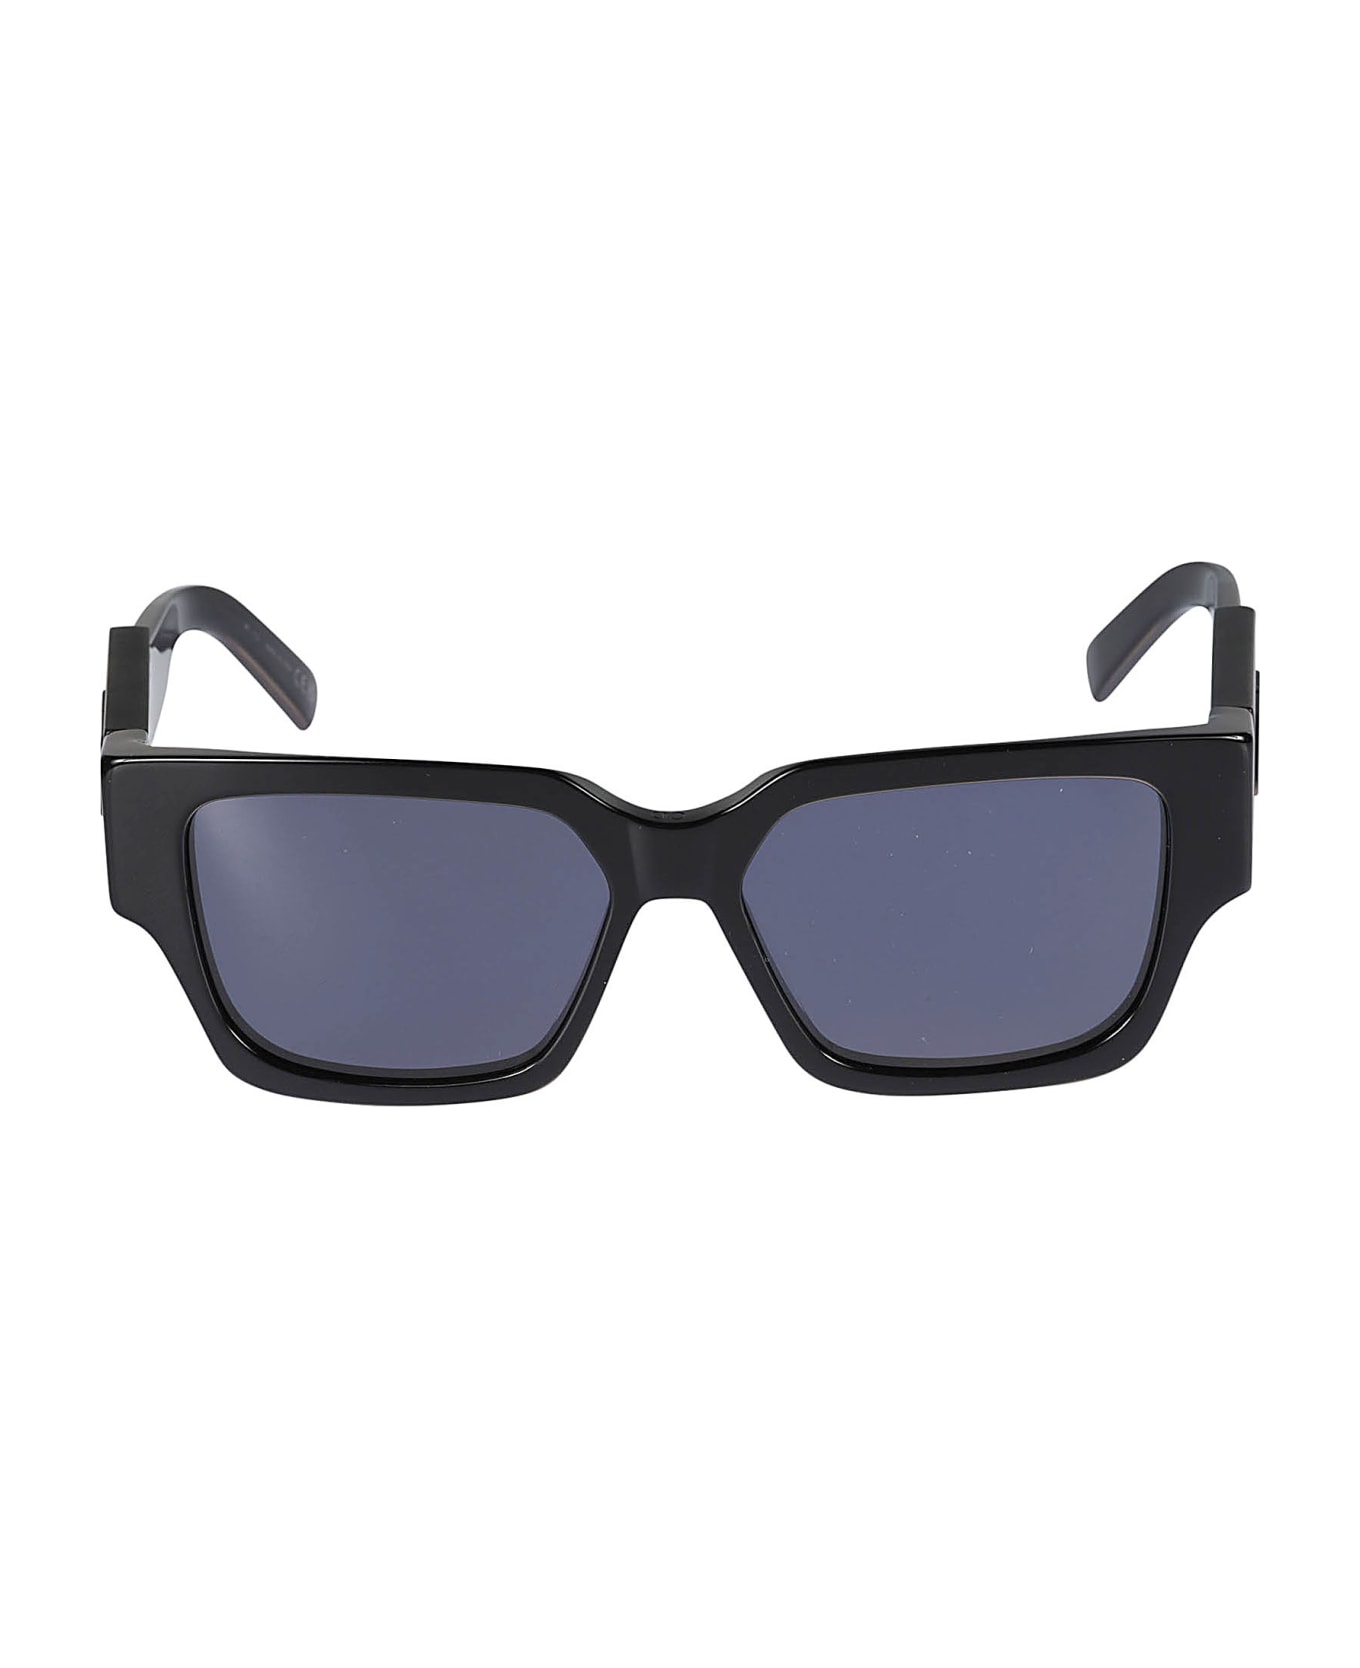 Dior Eyewear Cd Sunglasses - 16a0